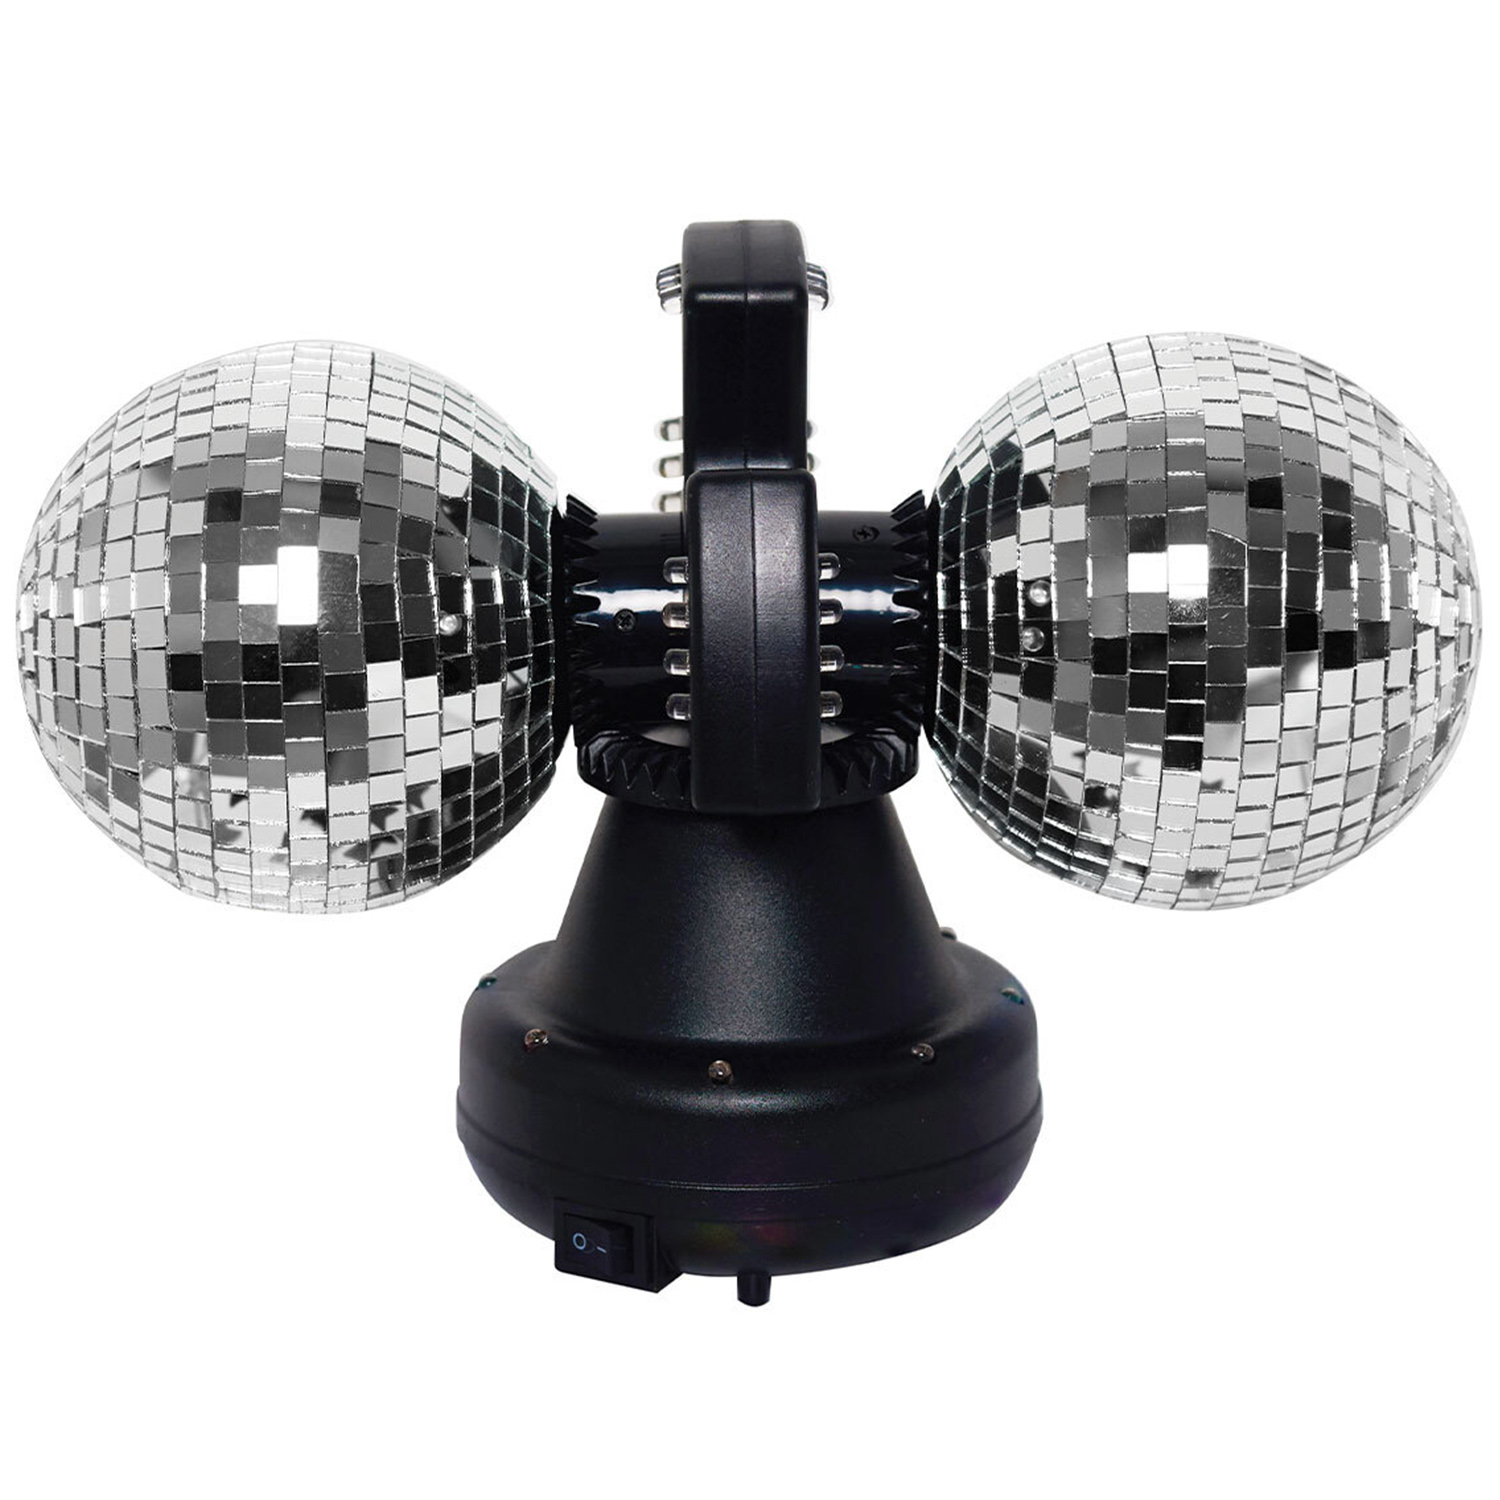 2 Ball LED Disco Light Image 1